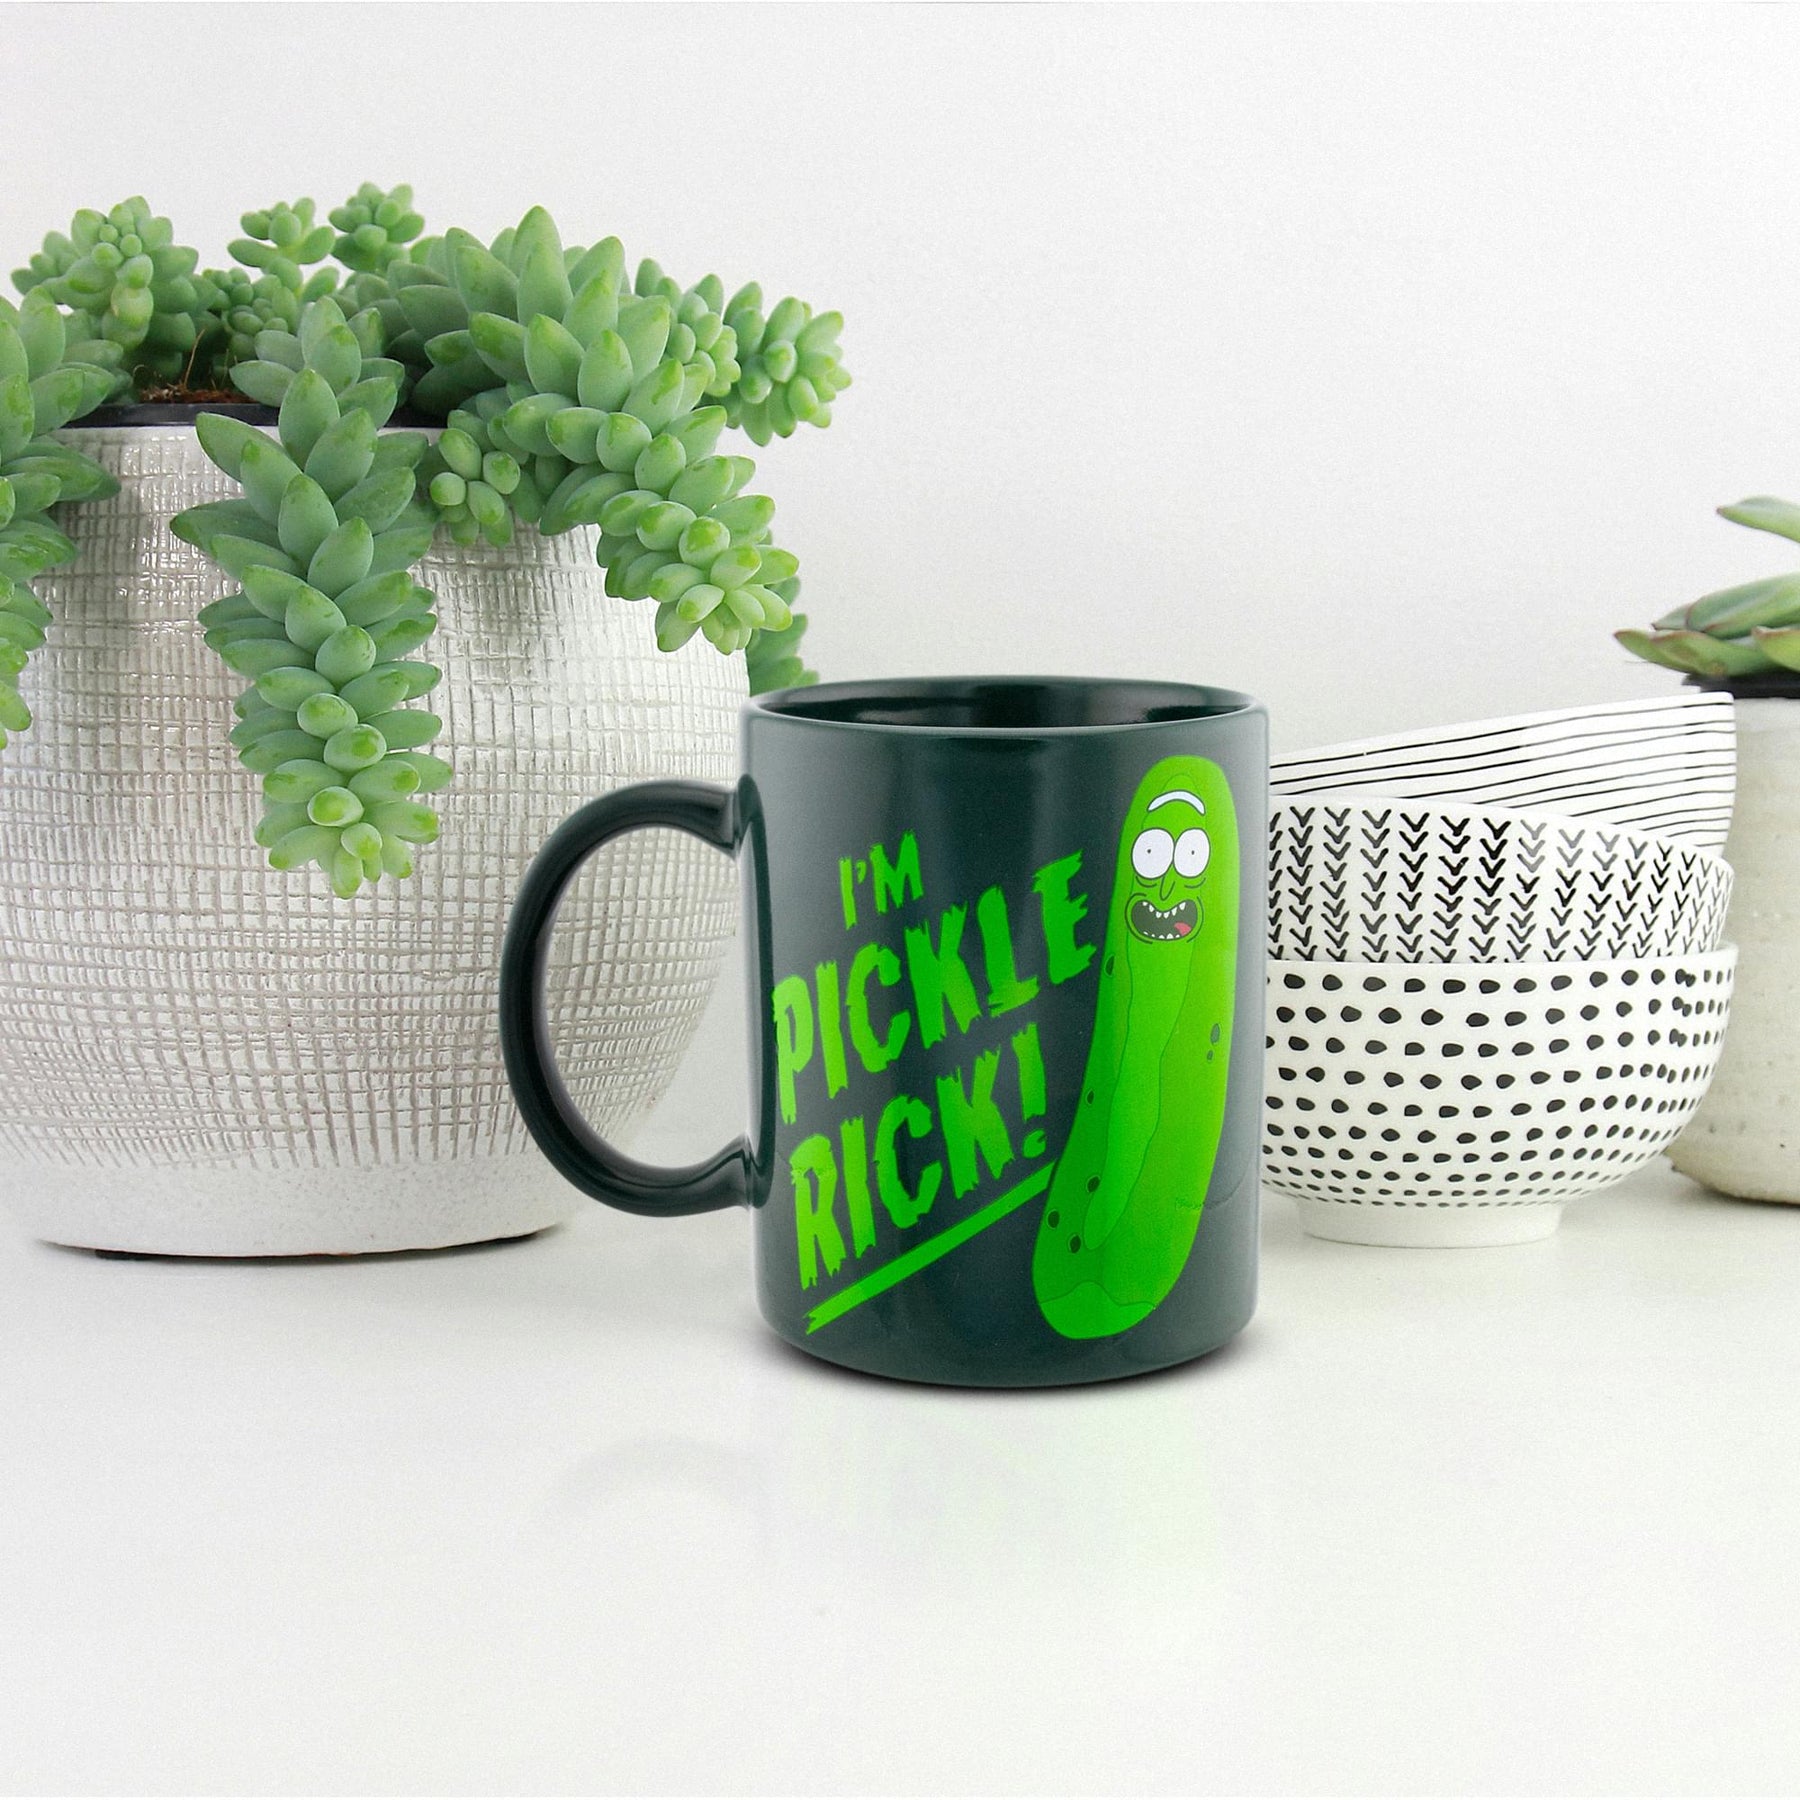 Rick and Morty Pickle Rick 12 Ounce Coffee Mug